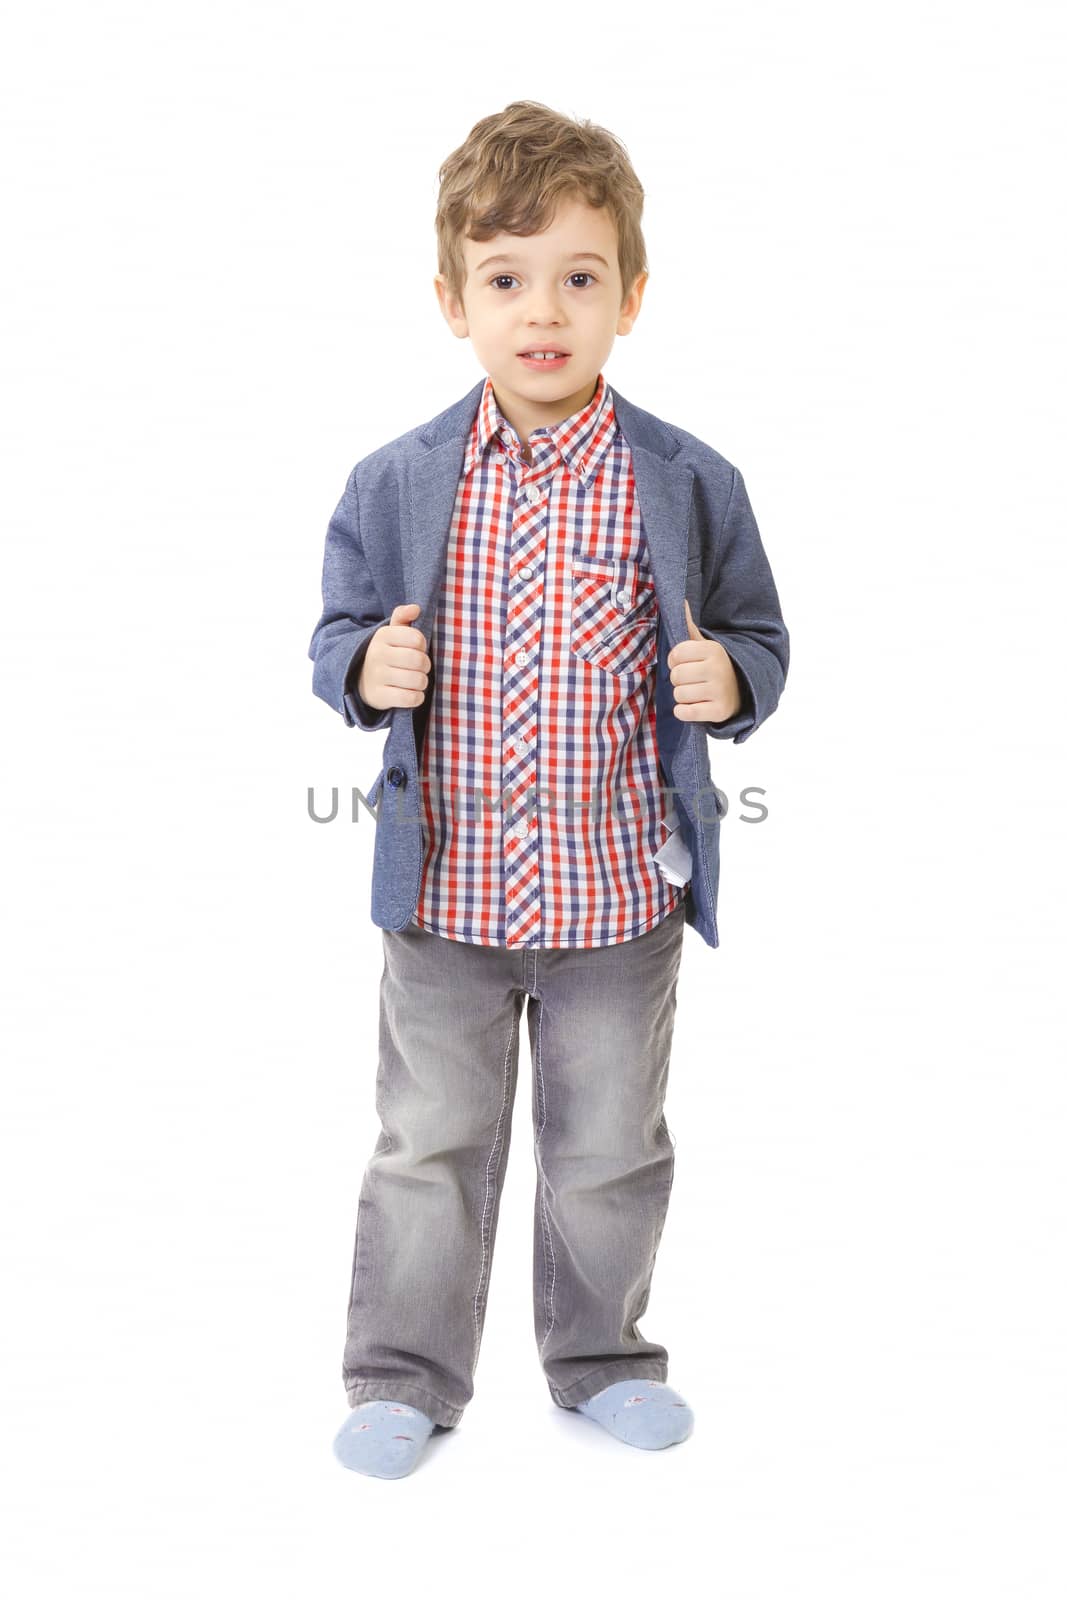 little boy with jacket on white background